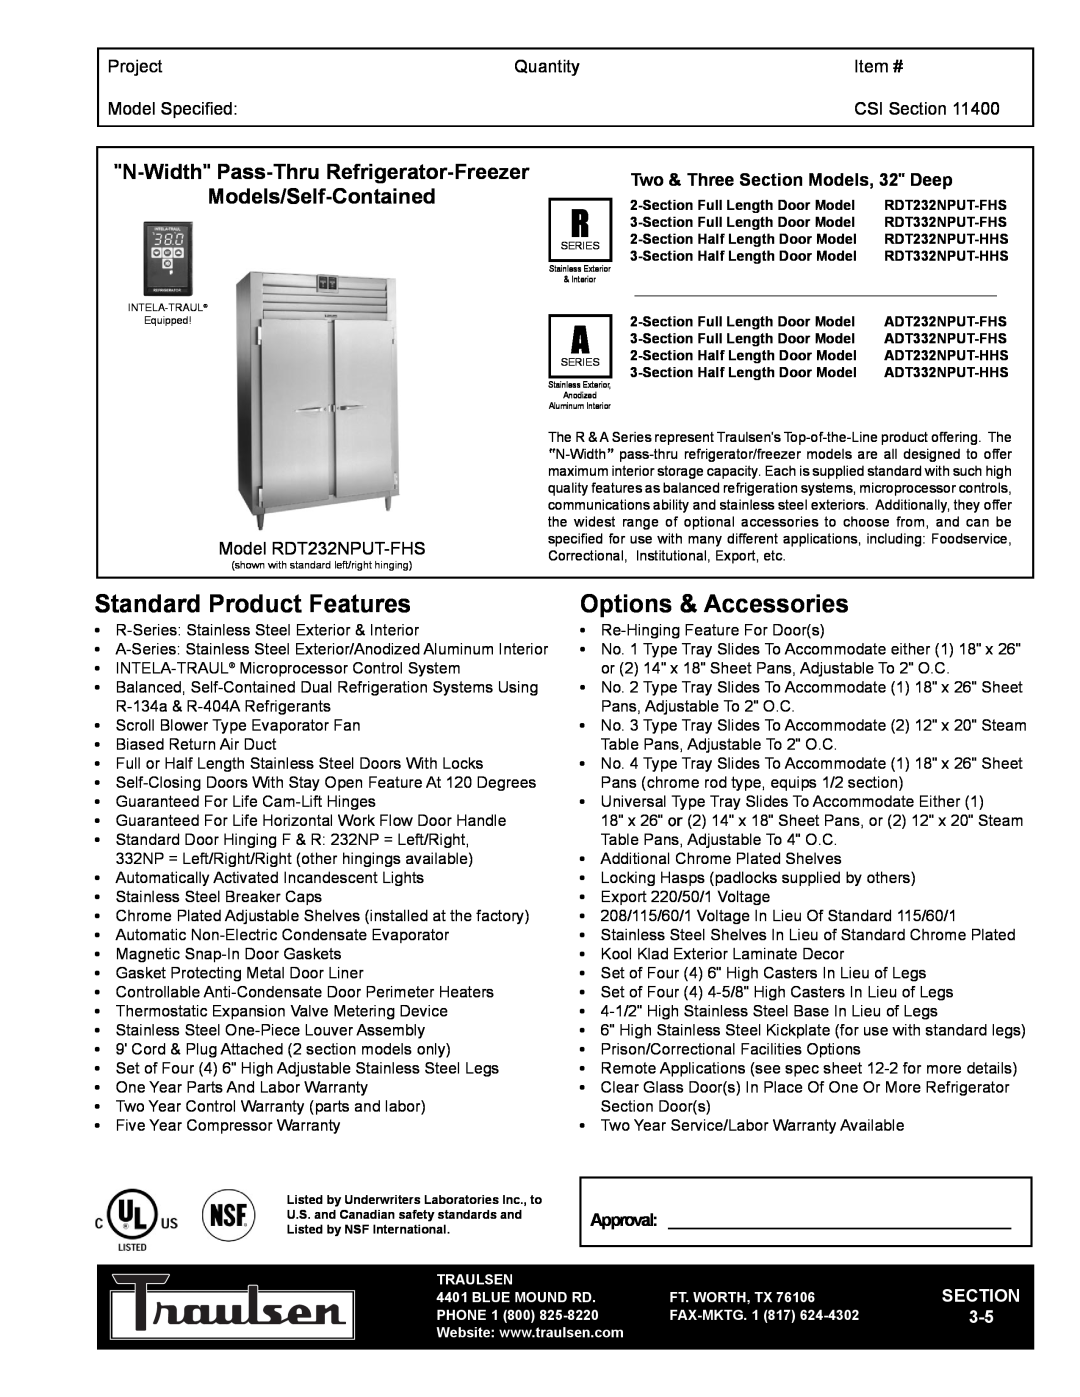 Traulsen RDT332NPUT-FHS warranty N-Width Pass-Thru Refrigerator-Freezer, Models/Self-Contained, Project, Quantity, Item # 